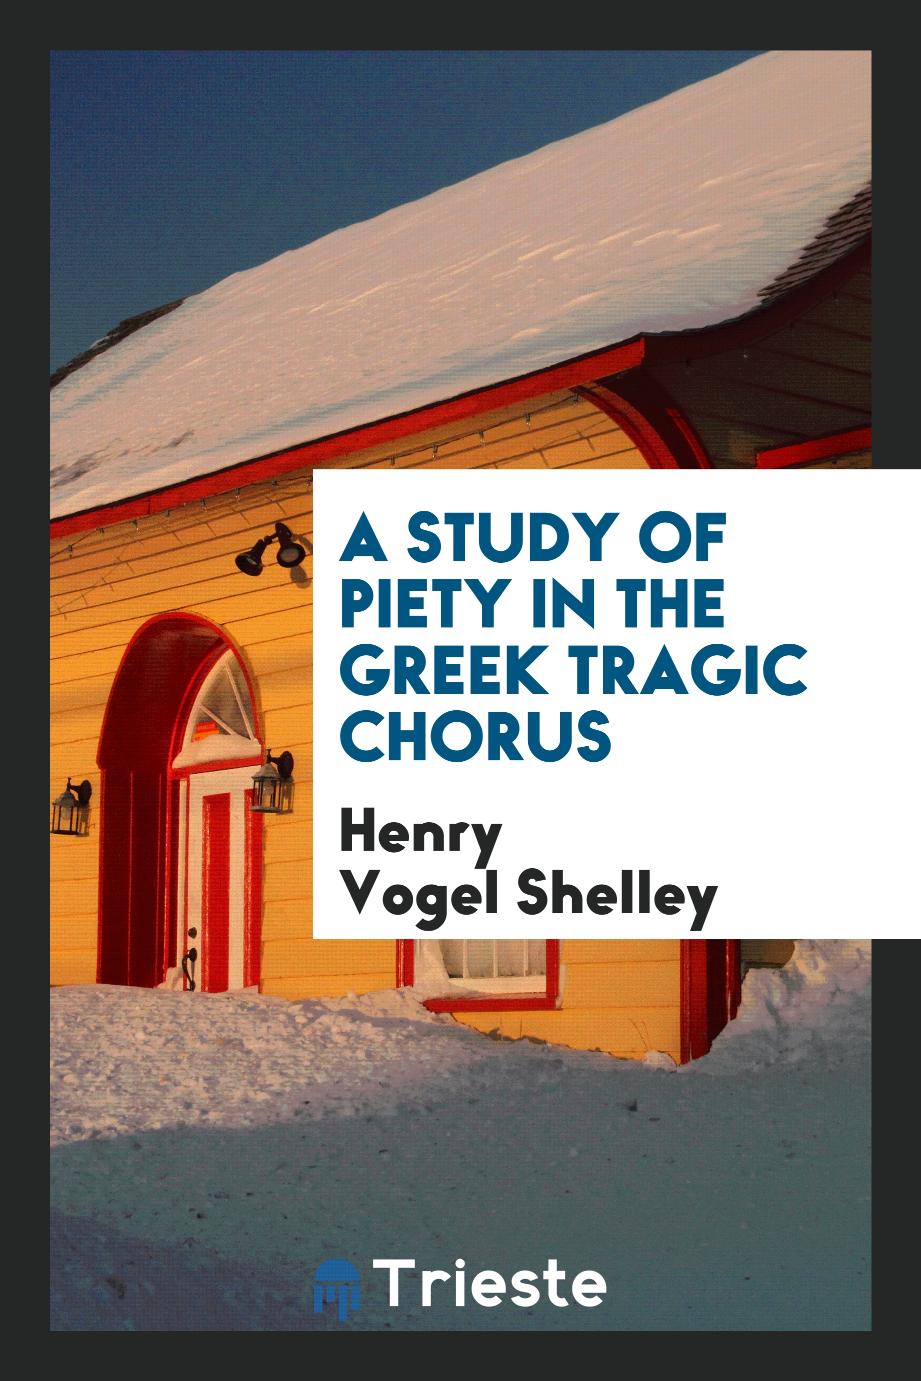 A Study of Piety in the Greek Tragic Chorus